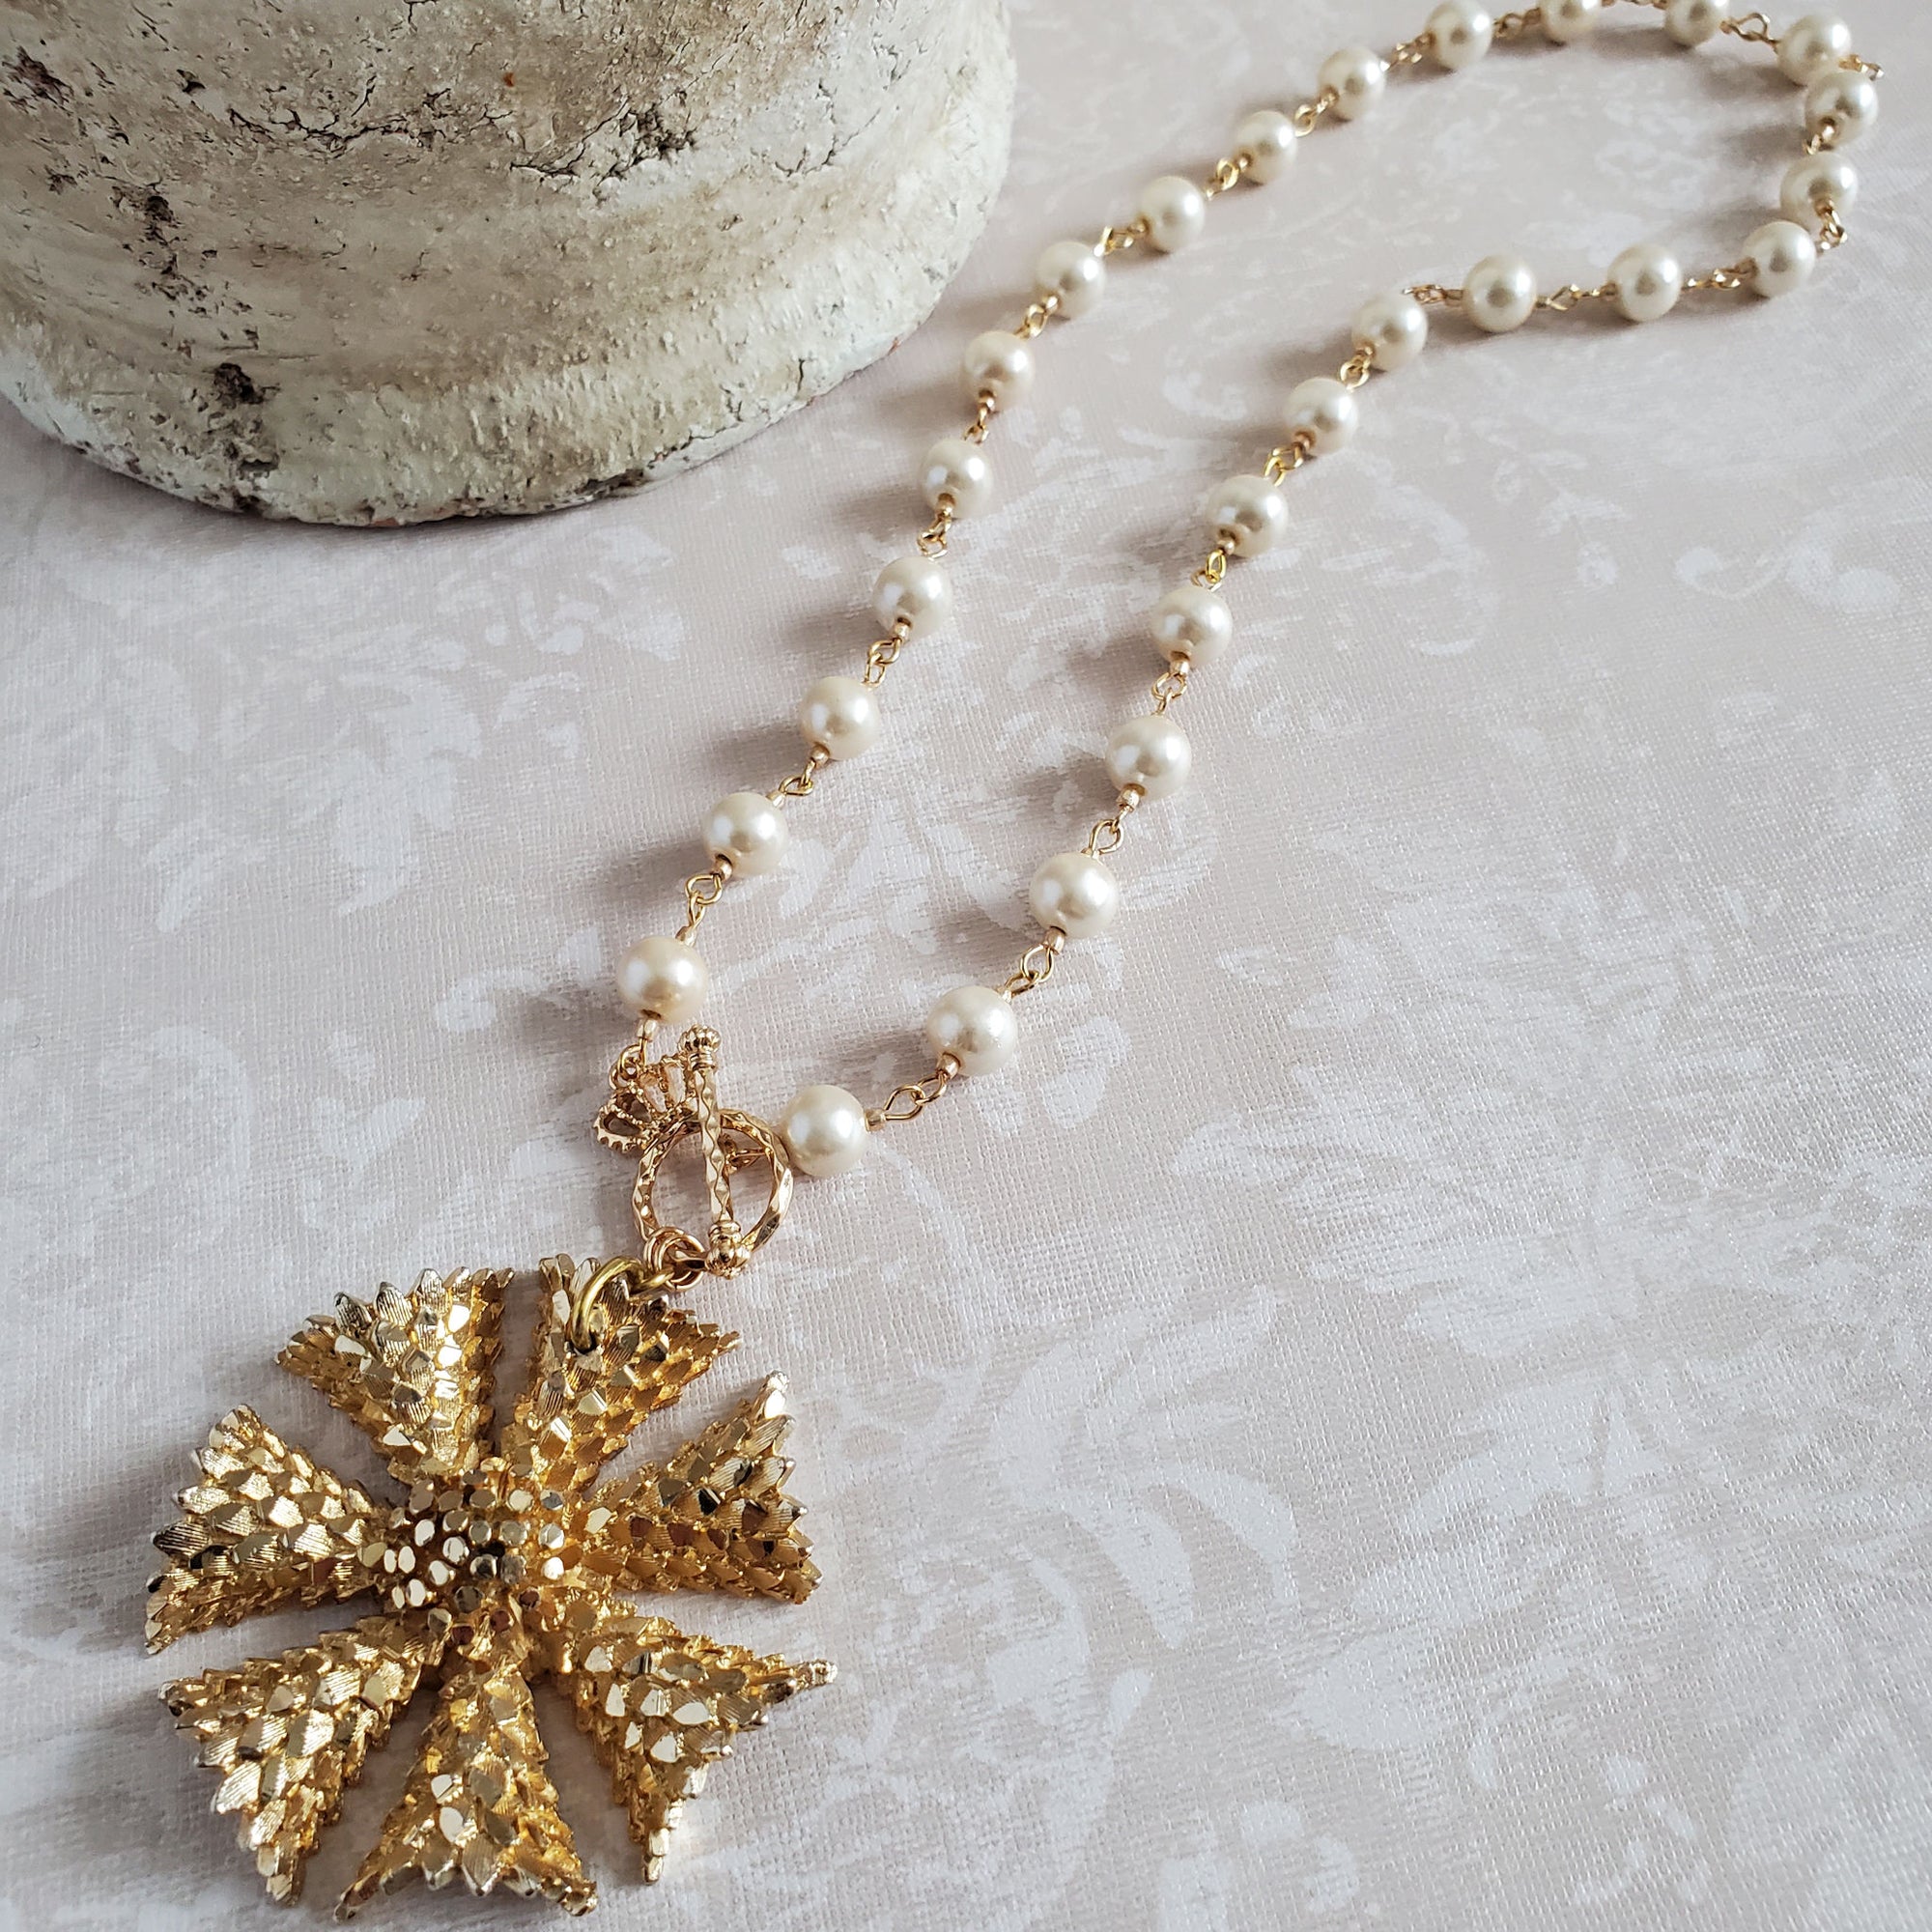 Modernist style, gold tone, ornate vintage pendant necklace.